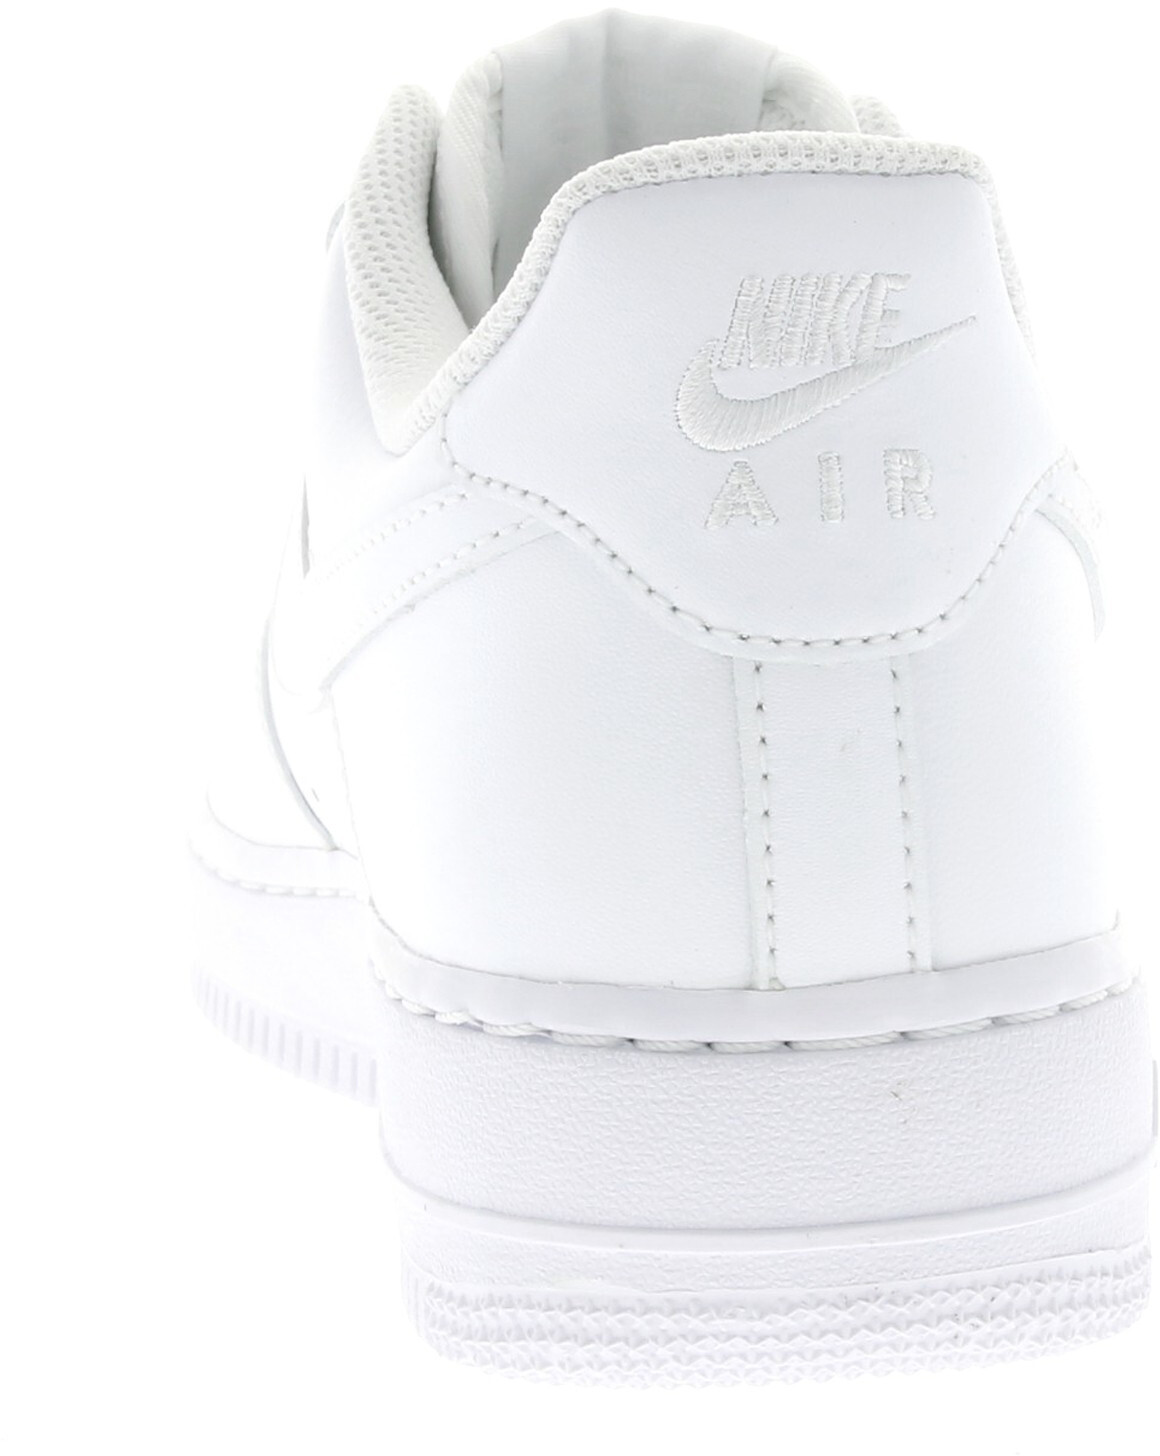 pantoffel Ontembare Maaltijd Nike Air Force 1 '07 all white ab 119,00 € (August 2023 Preise) |  Preisvergleich bei idealo.de